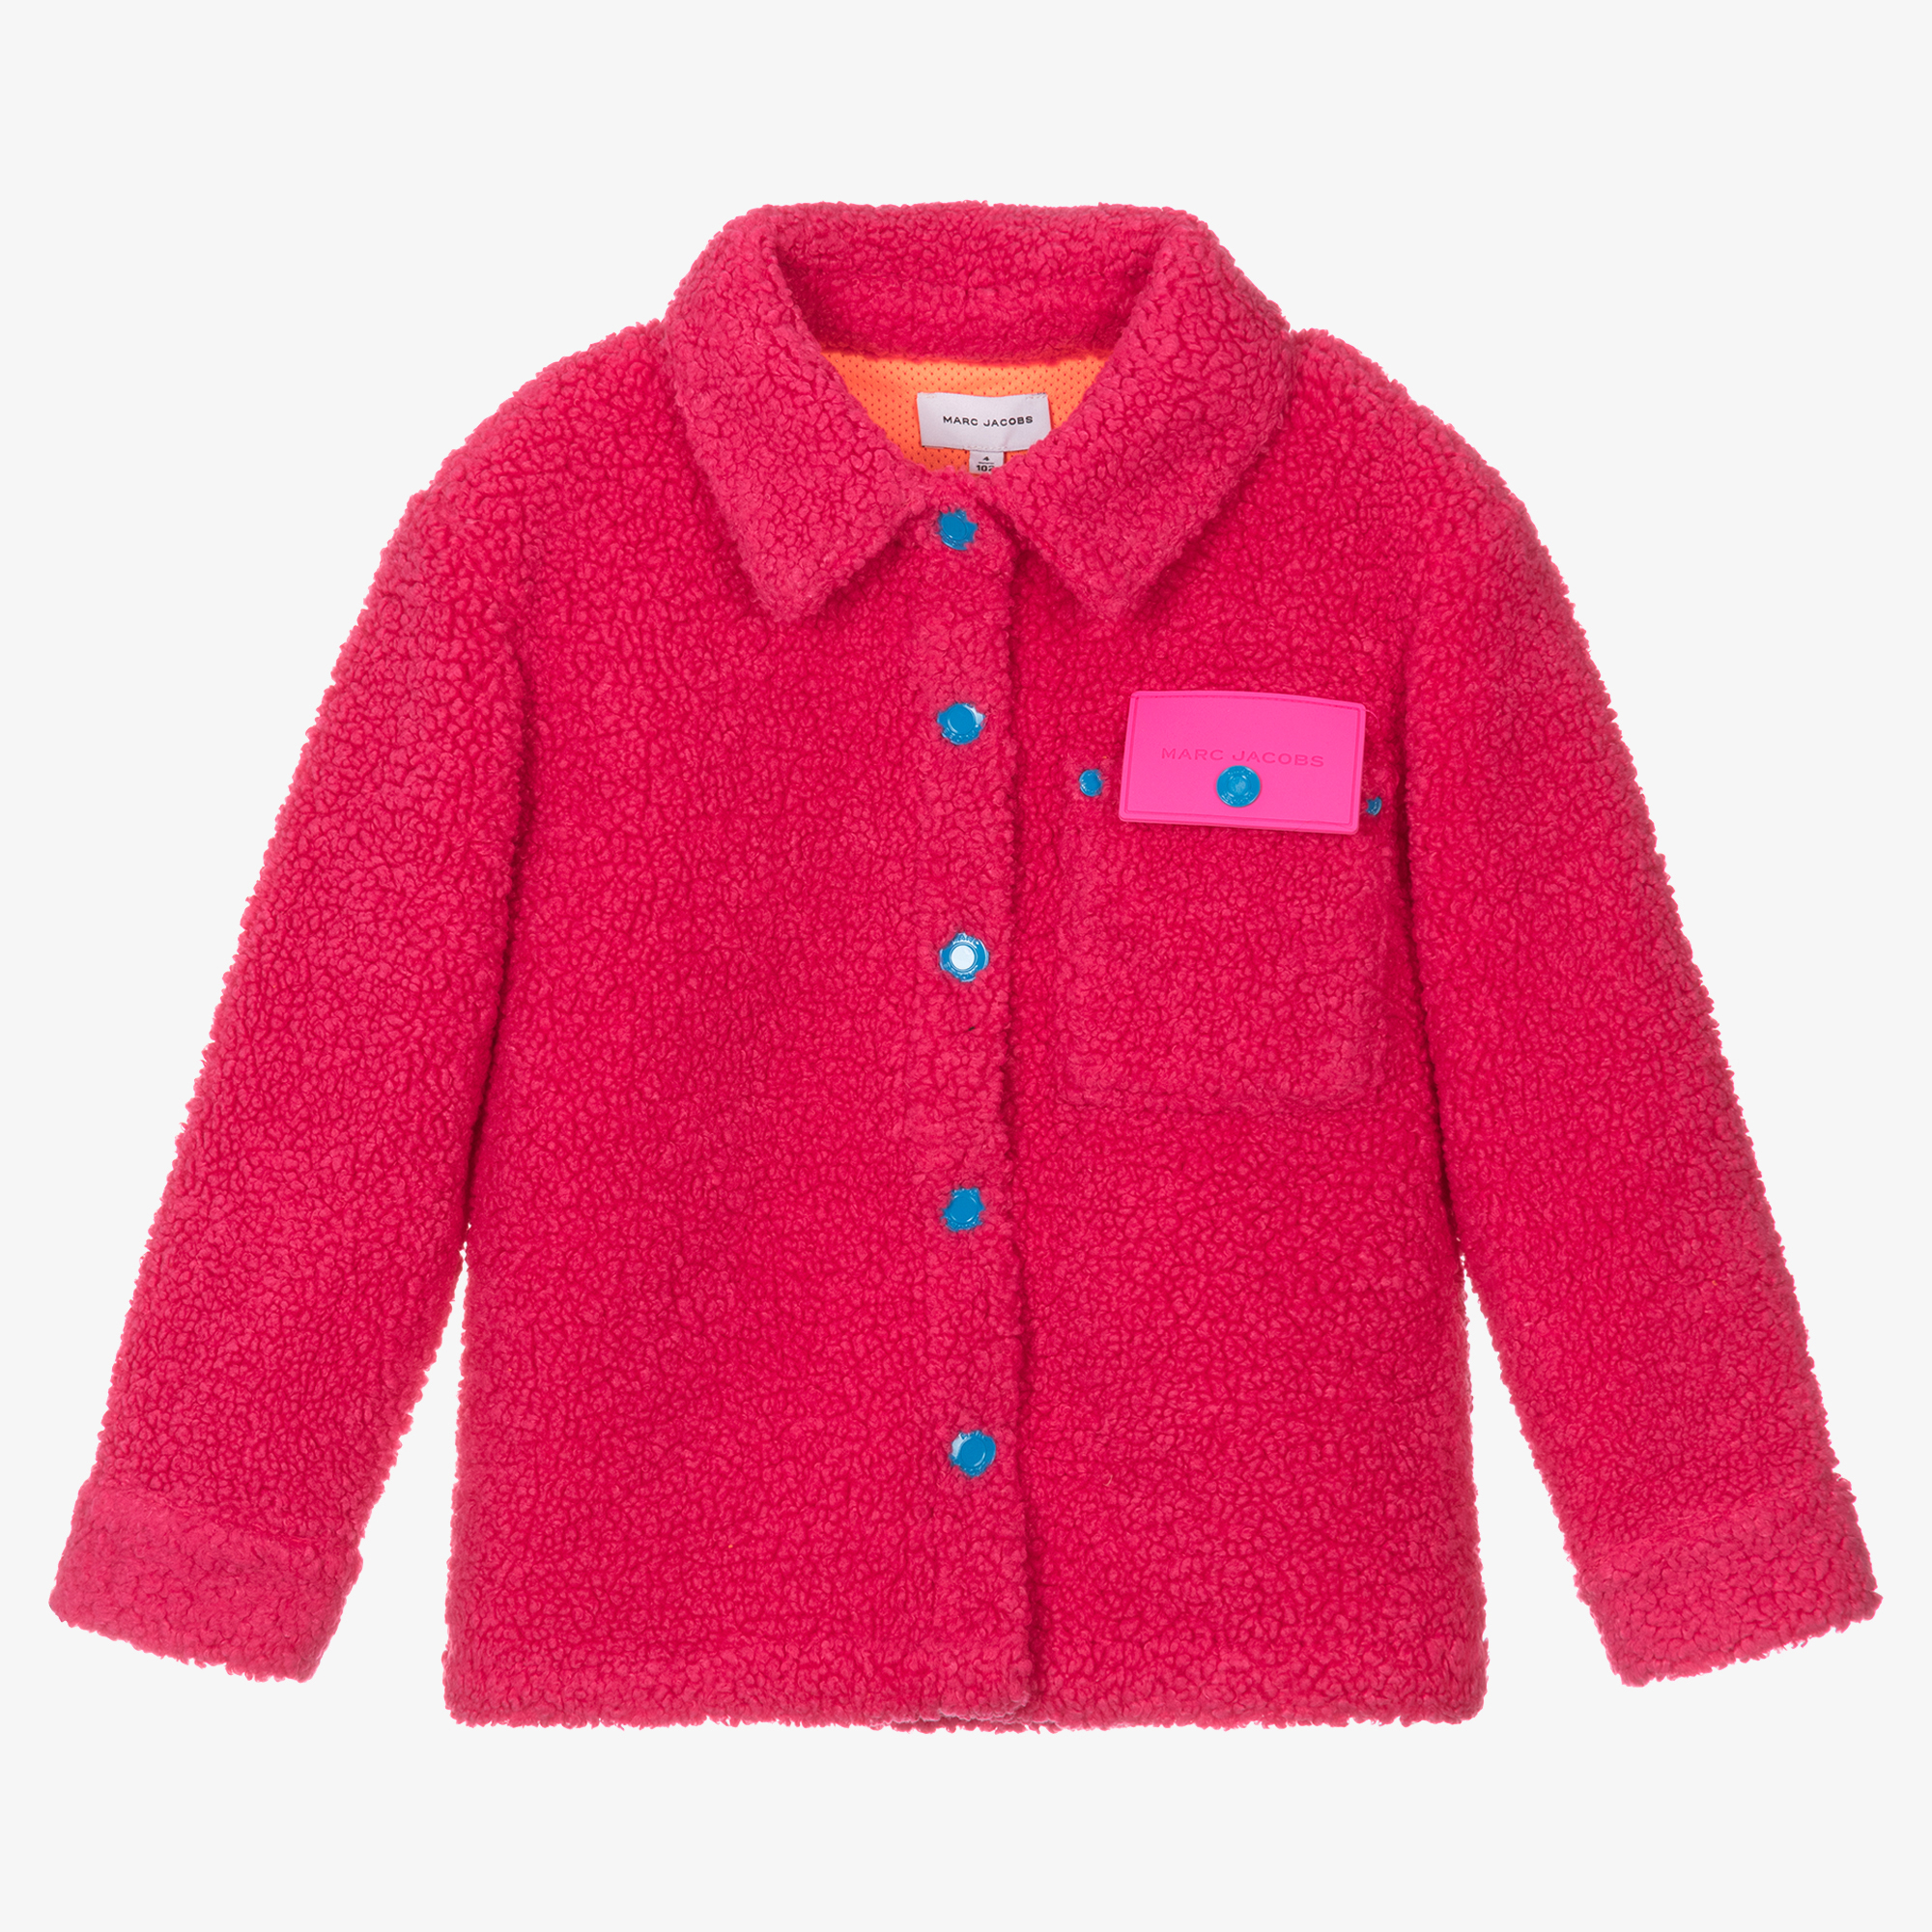 MARC JACOBS Girls Pink & Blue Iridescent Jacket